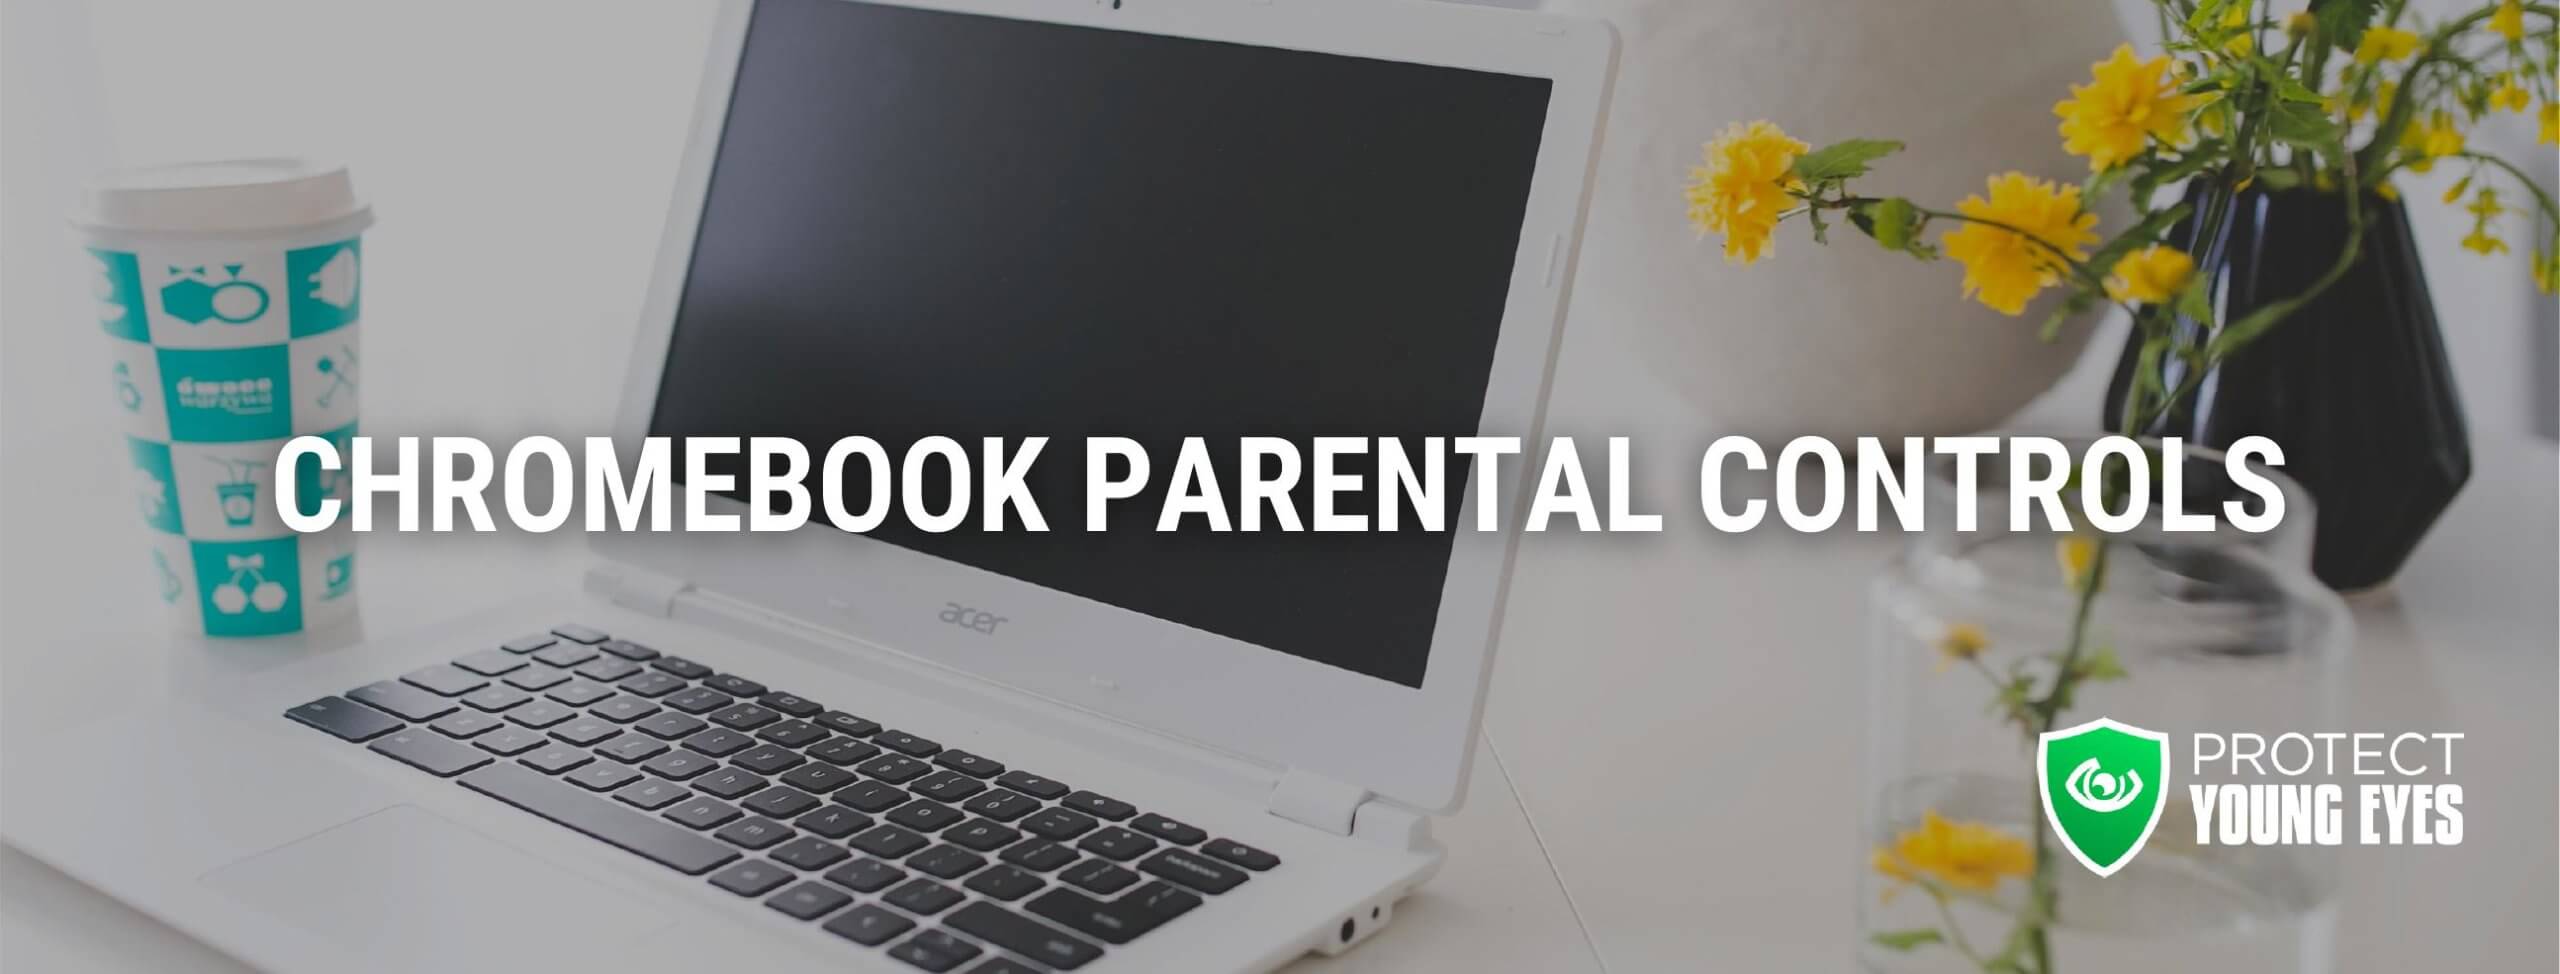 Chromebook Parental Controls PYE